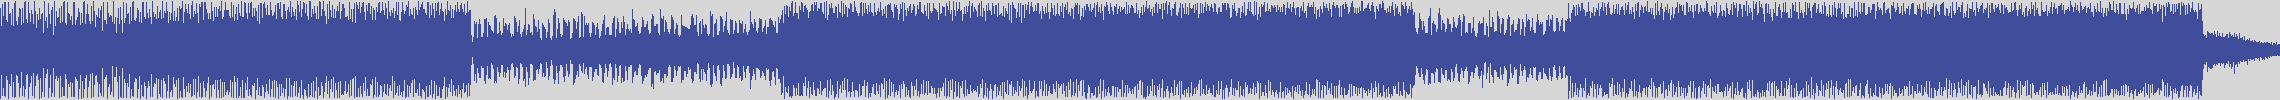 nf_boyz_records [NFY008] Roger Karlton - Werowen [Tech House Mix] audio wave form